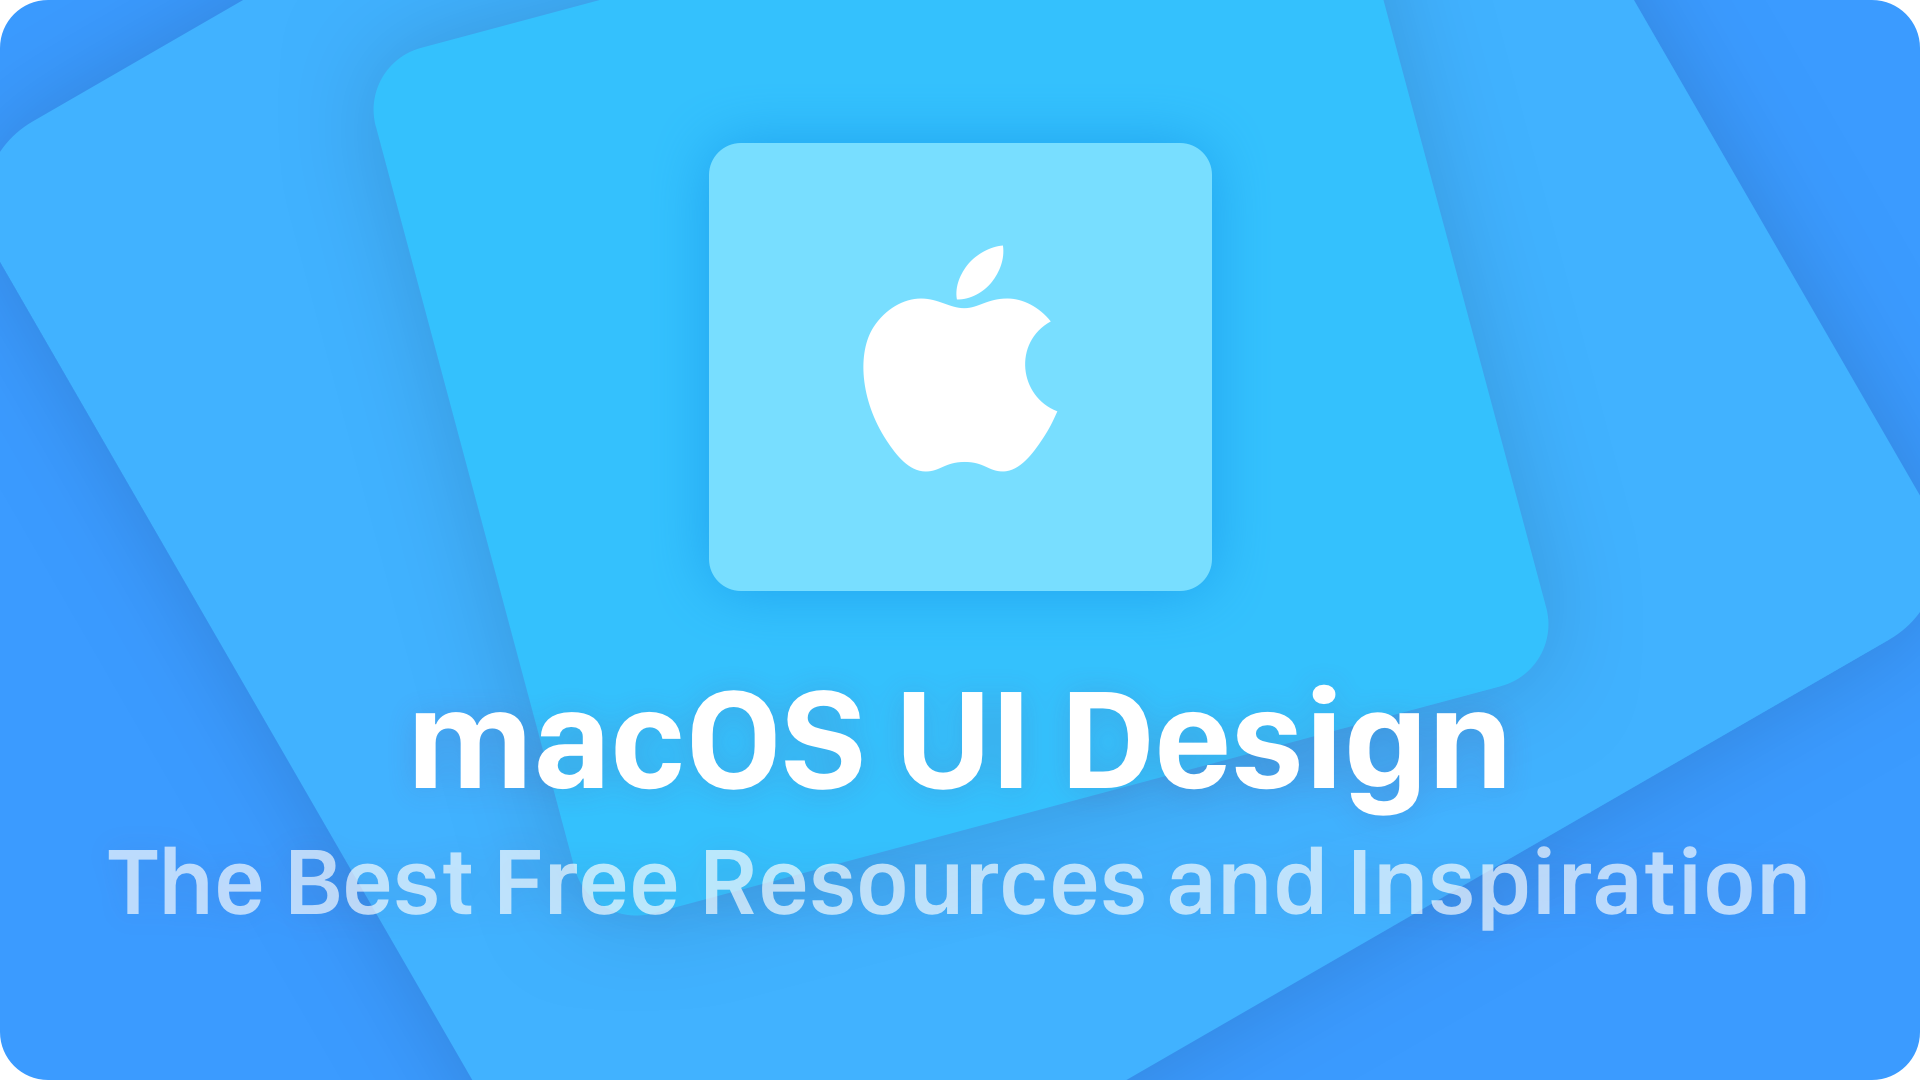 best logo design software for mac